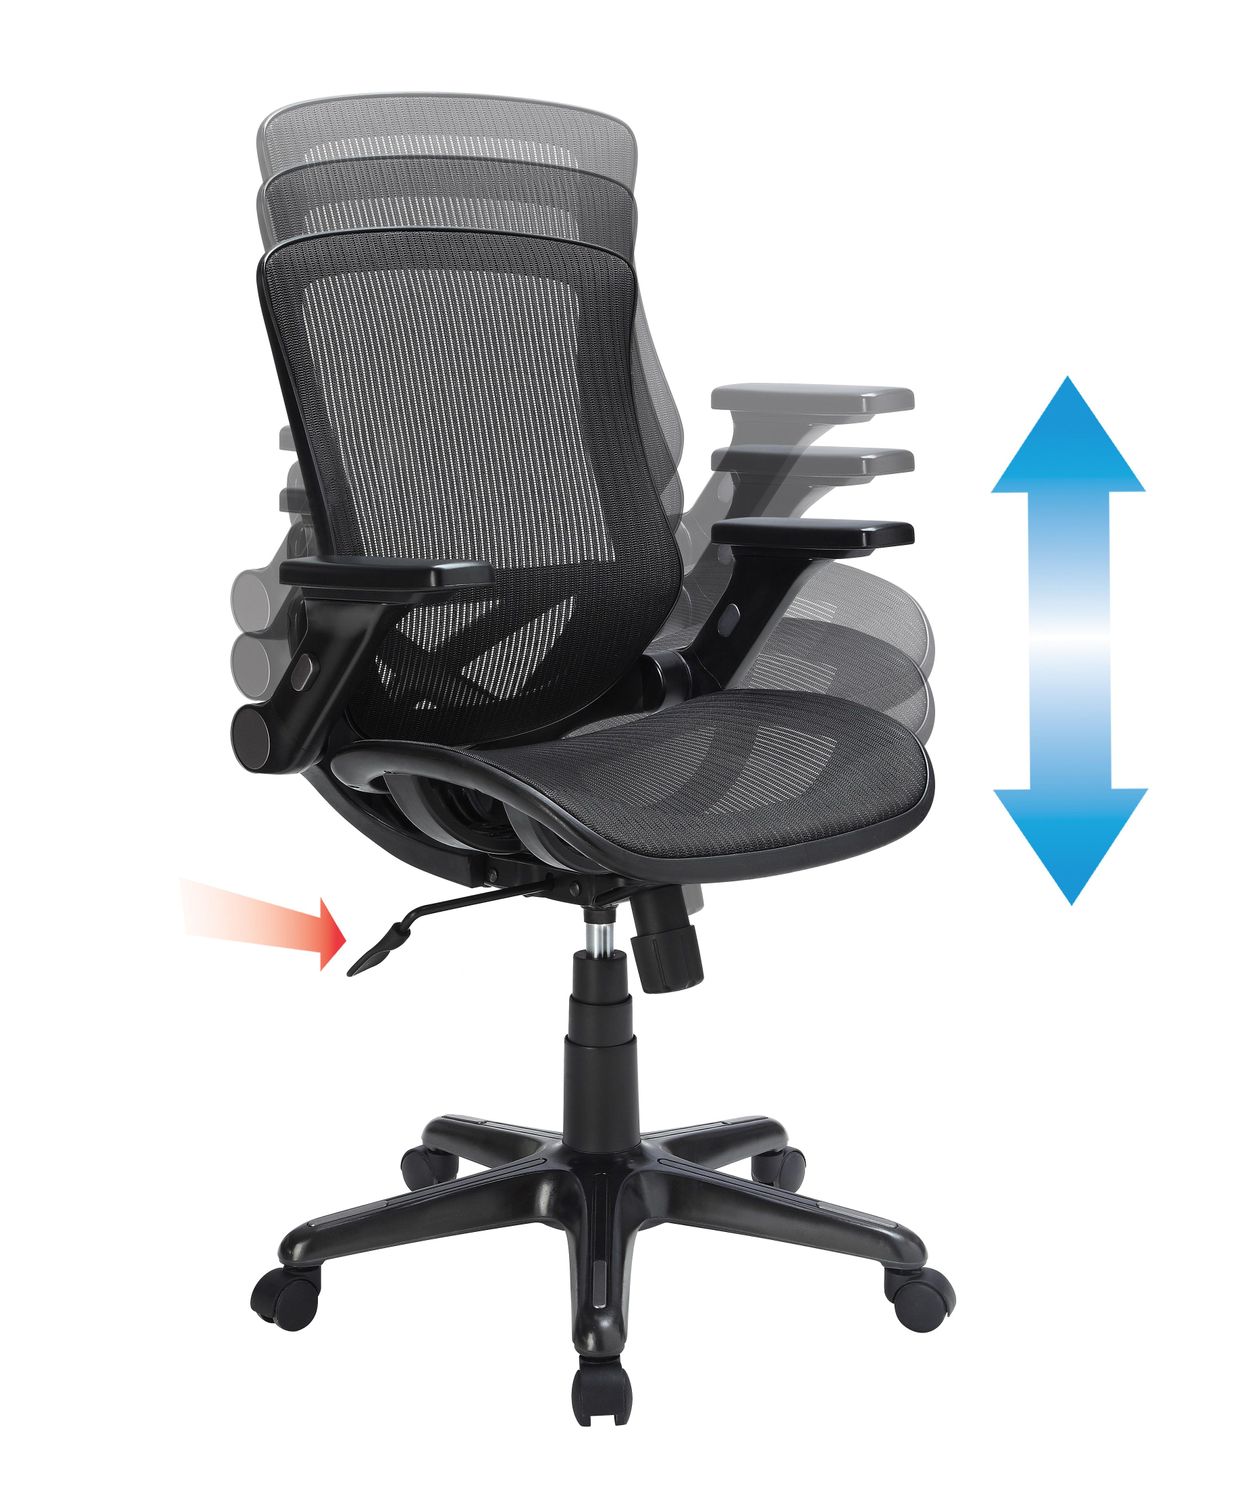 Bayside Furnishings Metrex Iv Mesh Office Chair Costco